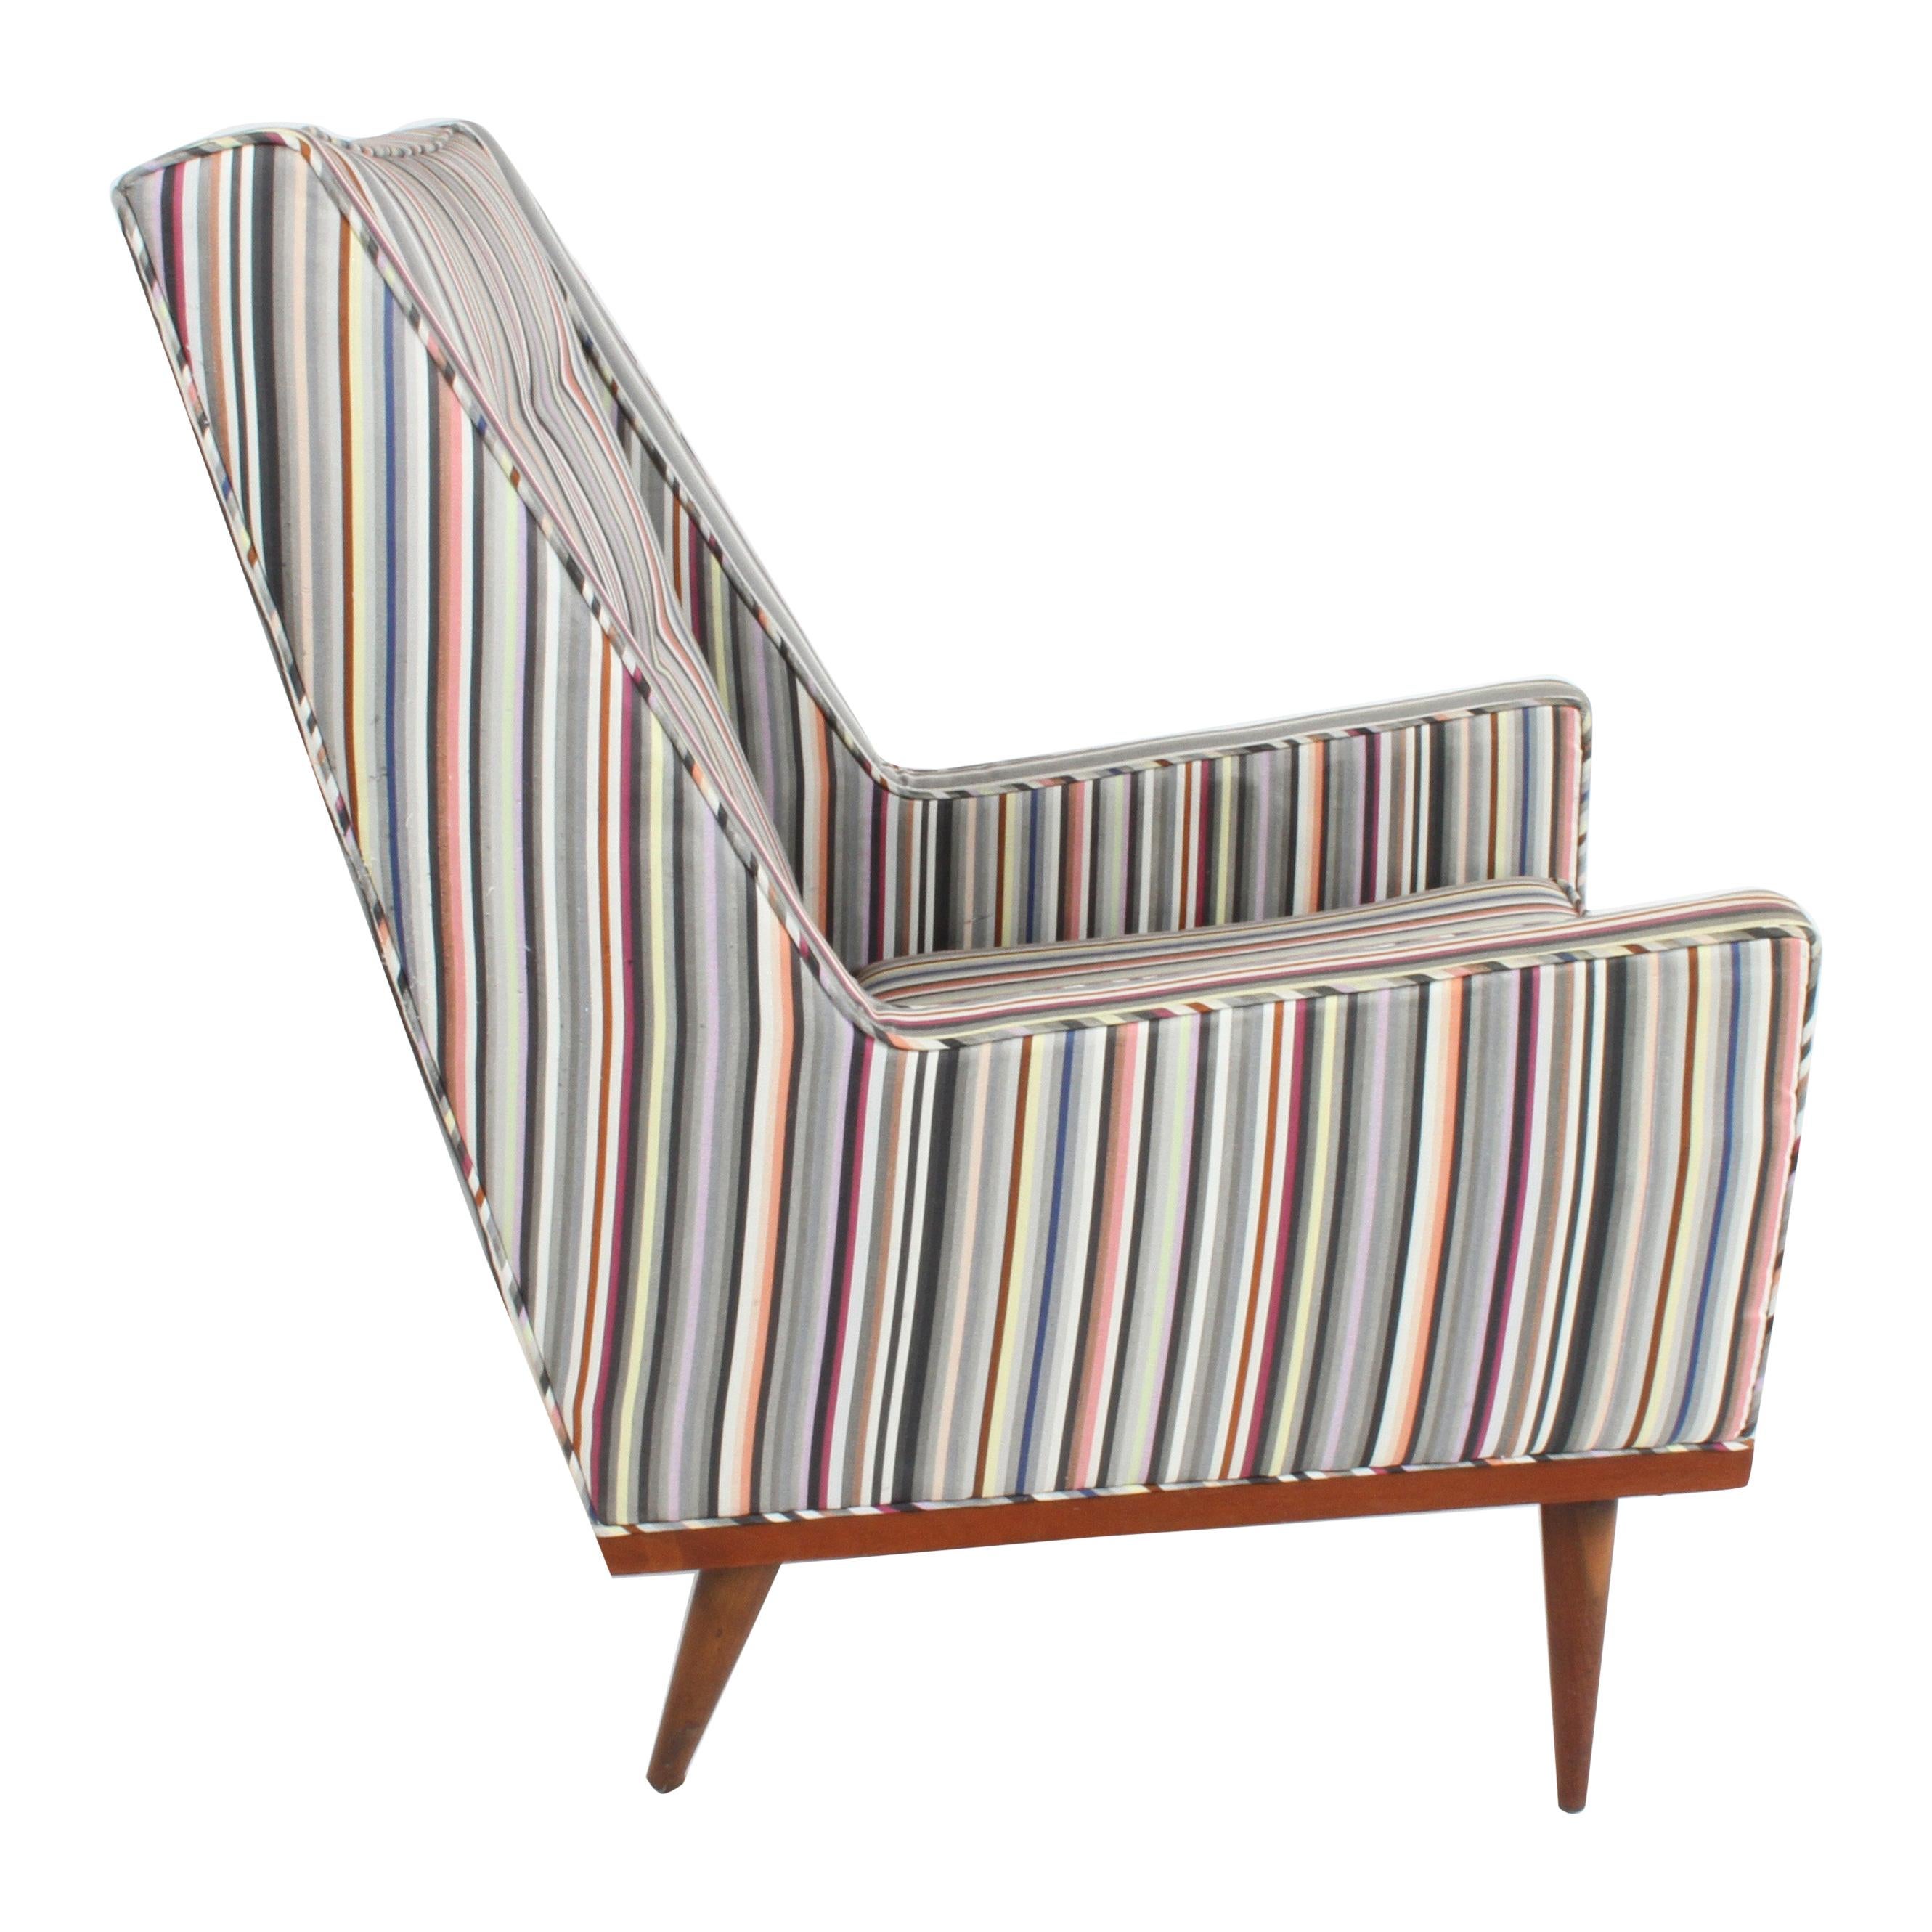 Milo Baughman for James Inc. Walnut with Stripe Lounge Chair